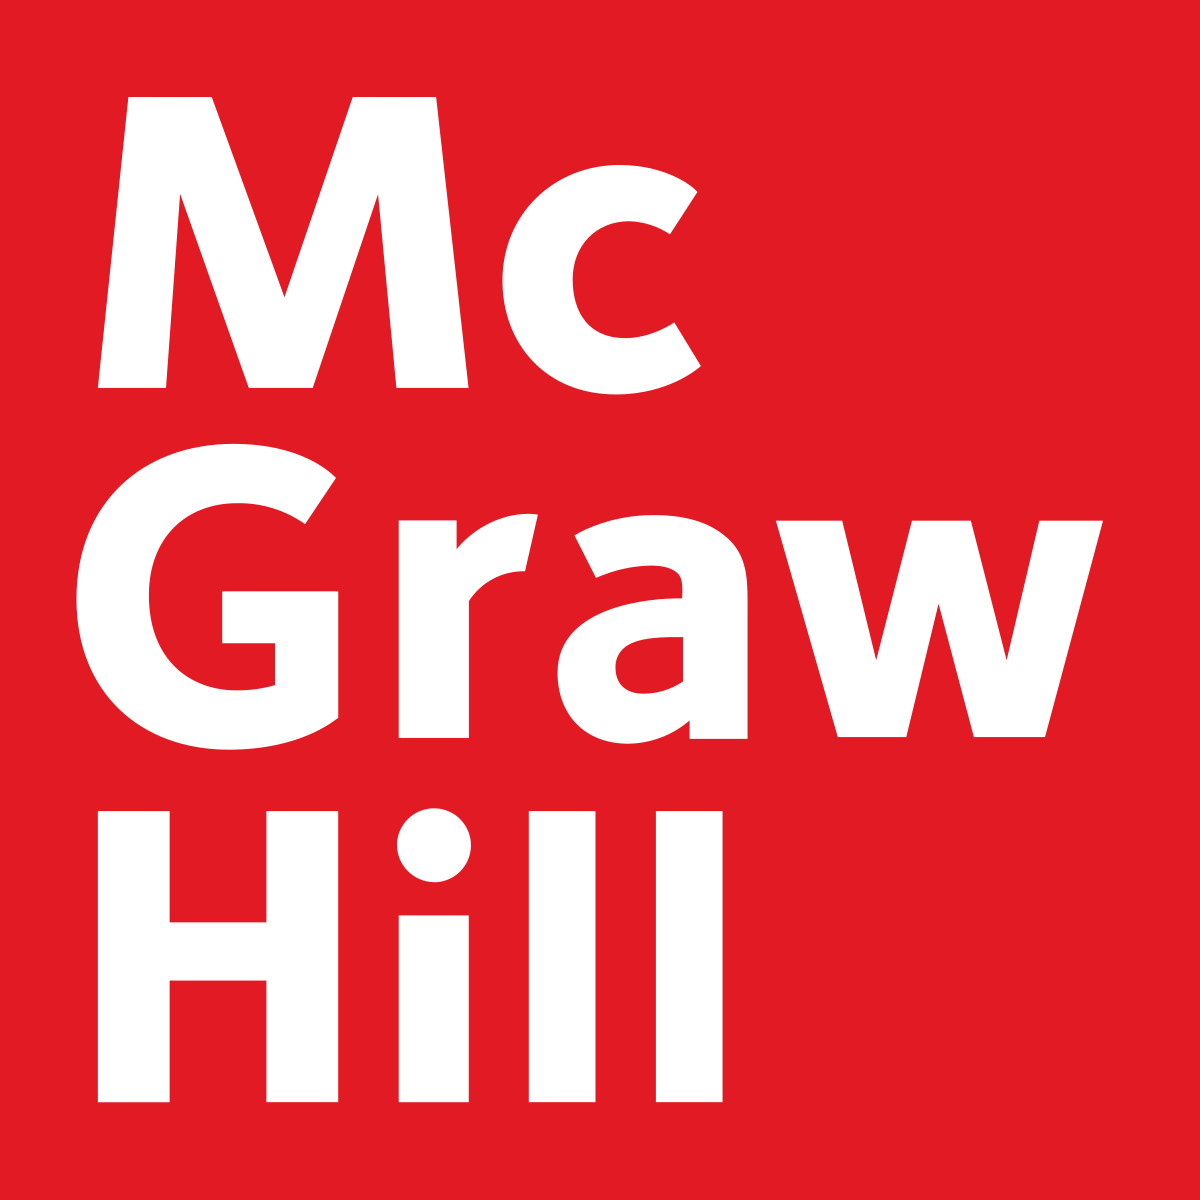 mc graw hill logo